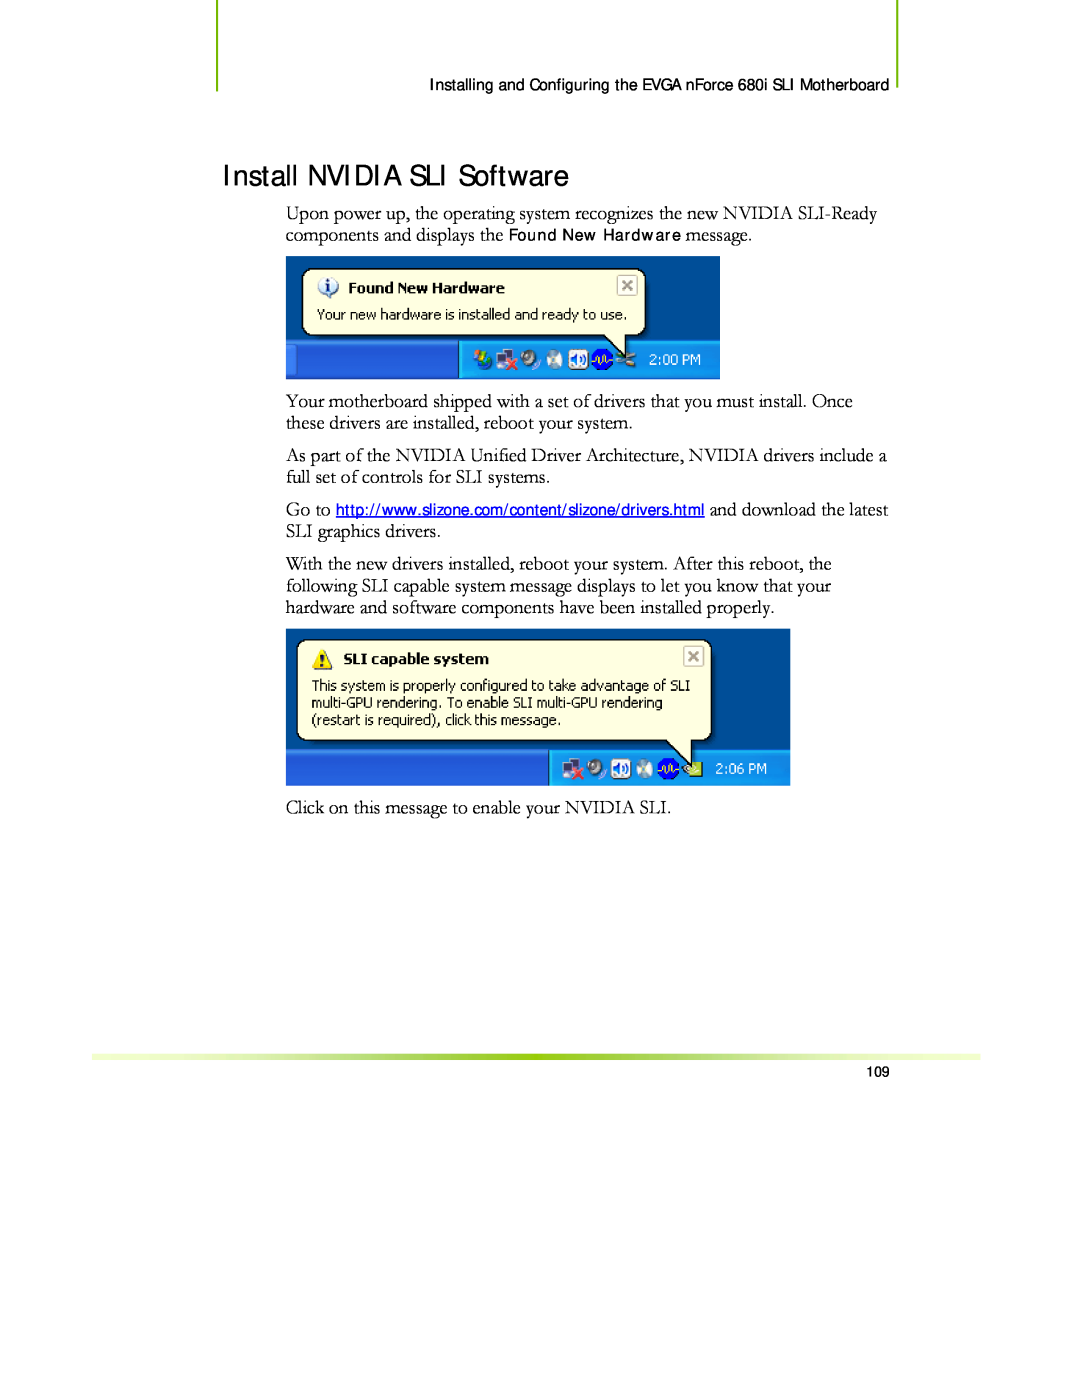 EVGA 122-CK-NF68-XX manual Install NVIDIA SLI Software 